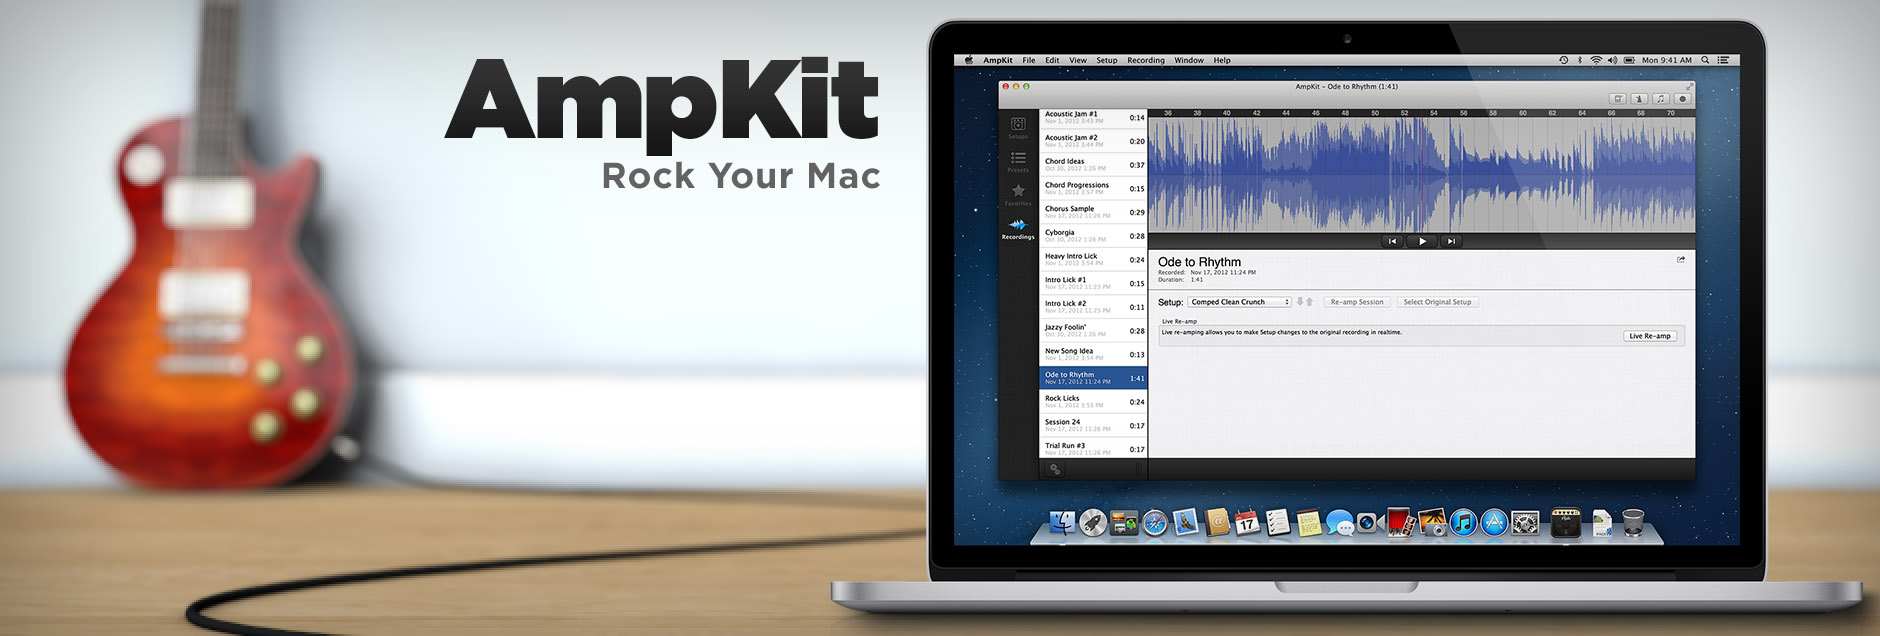 AmpKit Mac feature image